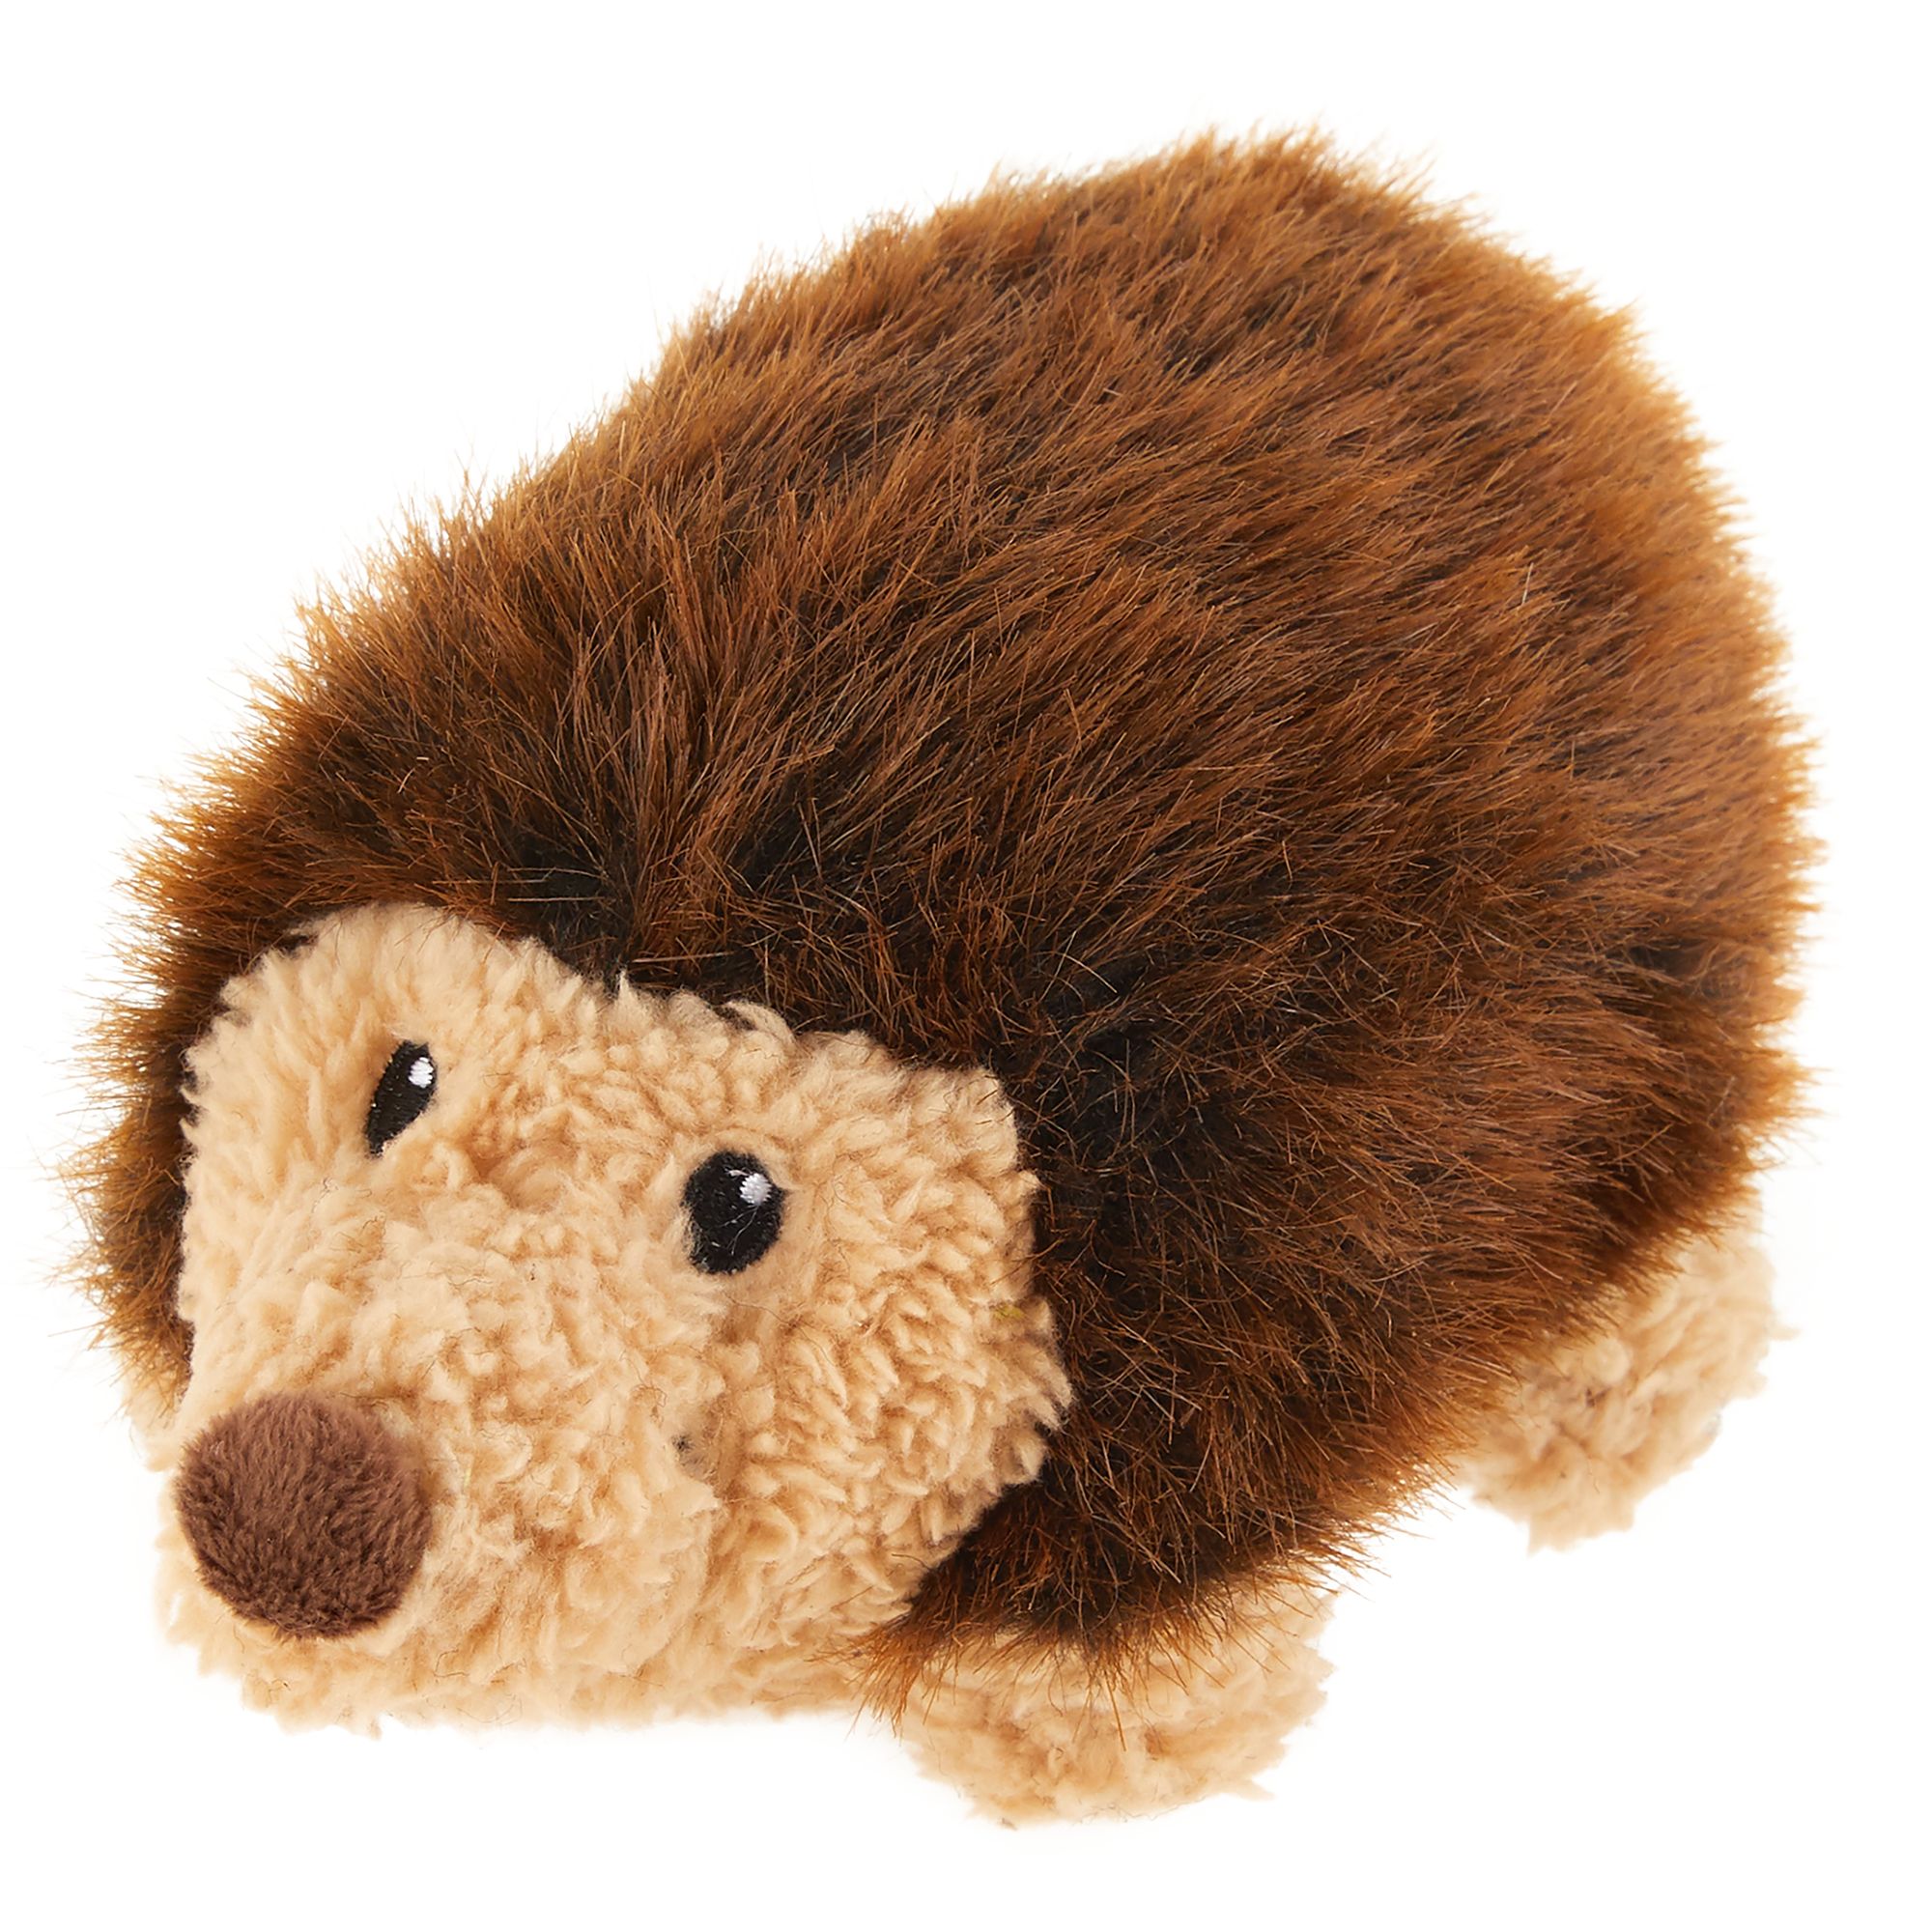 hedgehog dog toy